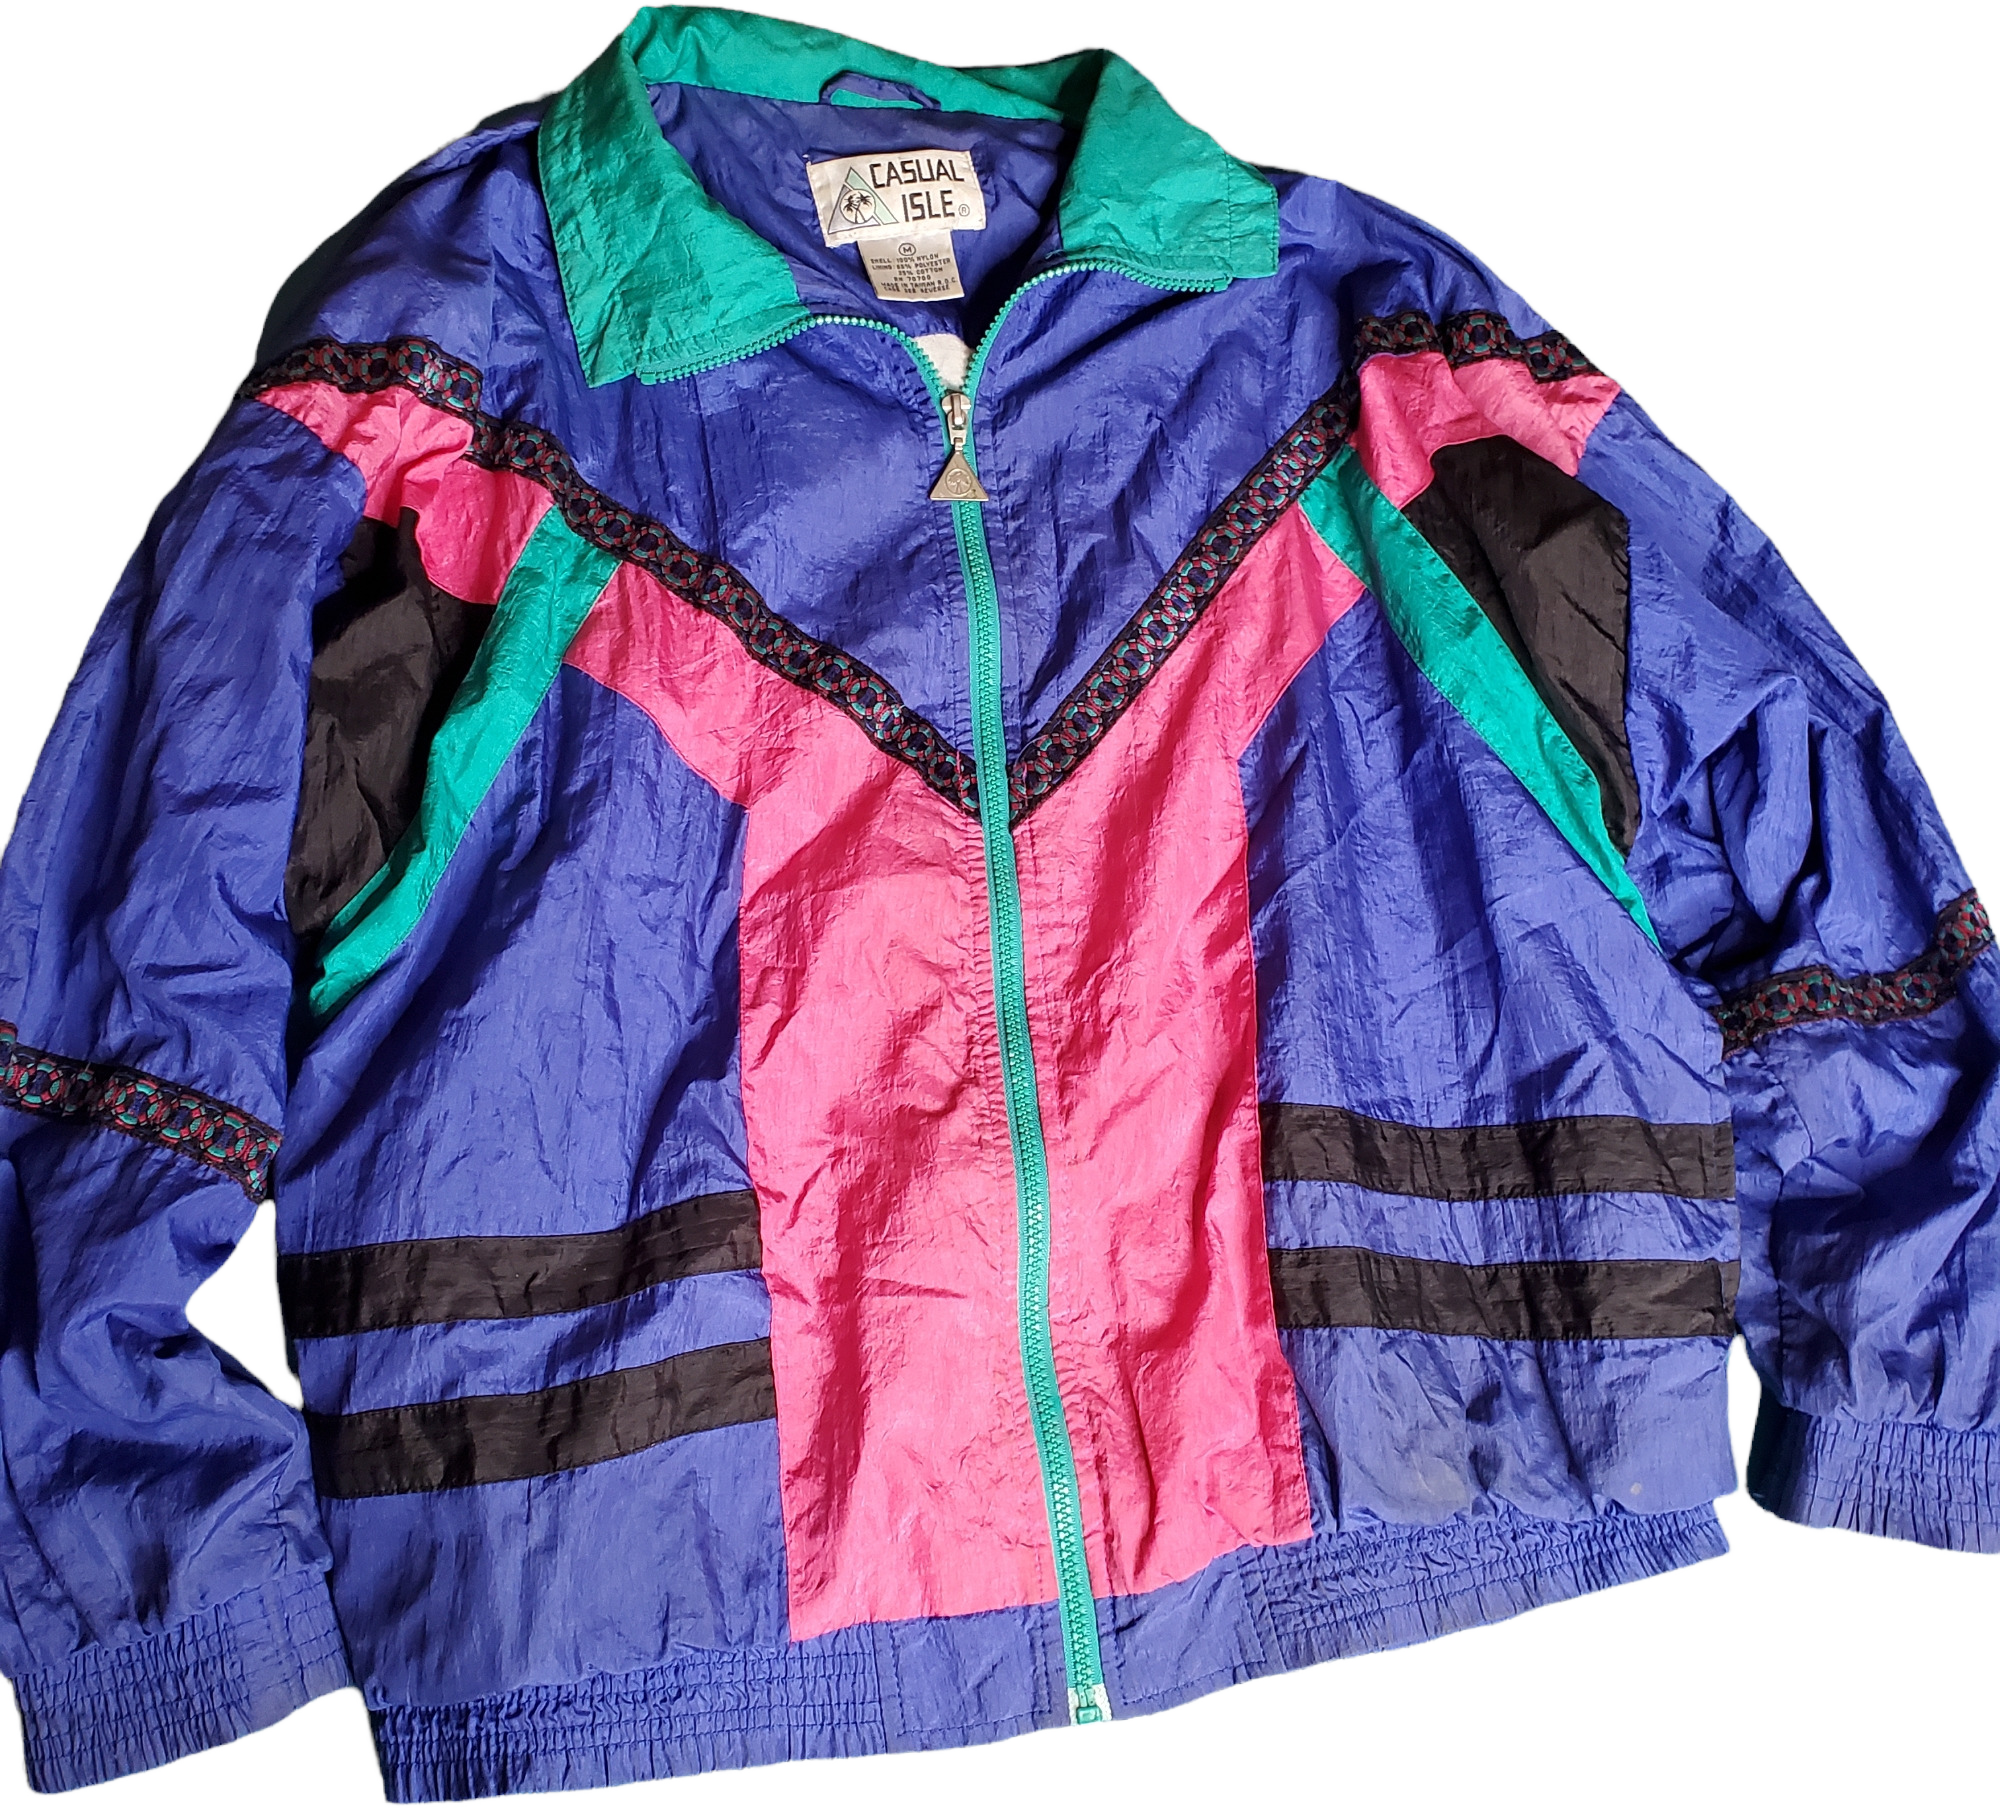 Adult 90s Windbreaker Jacket